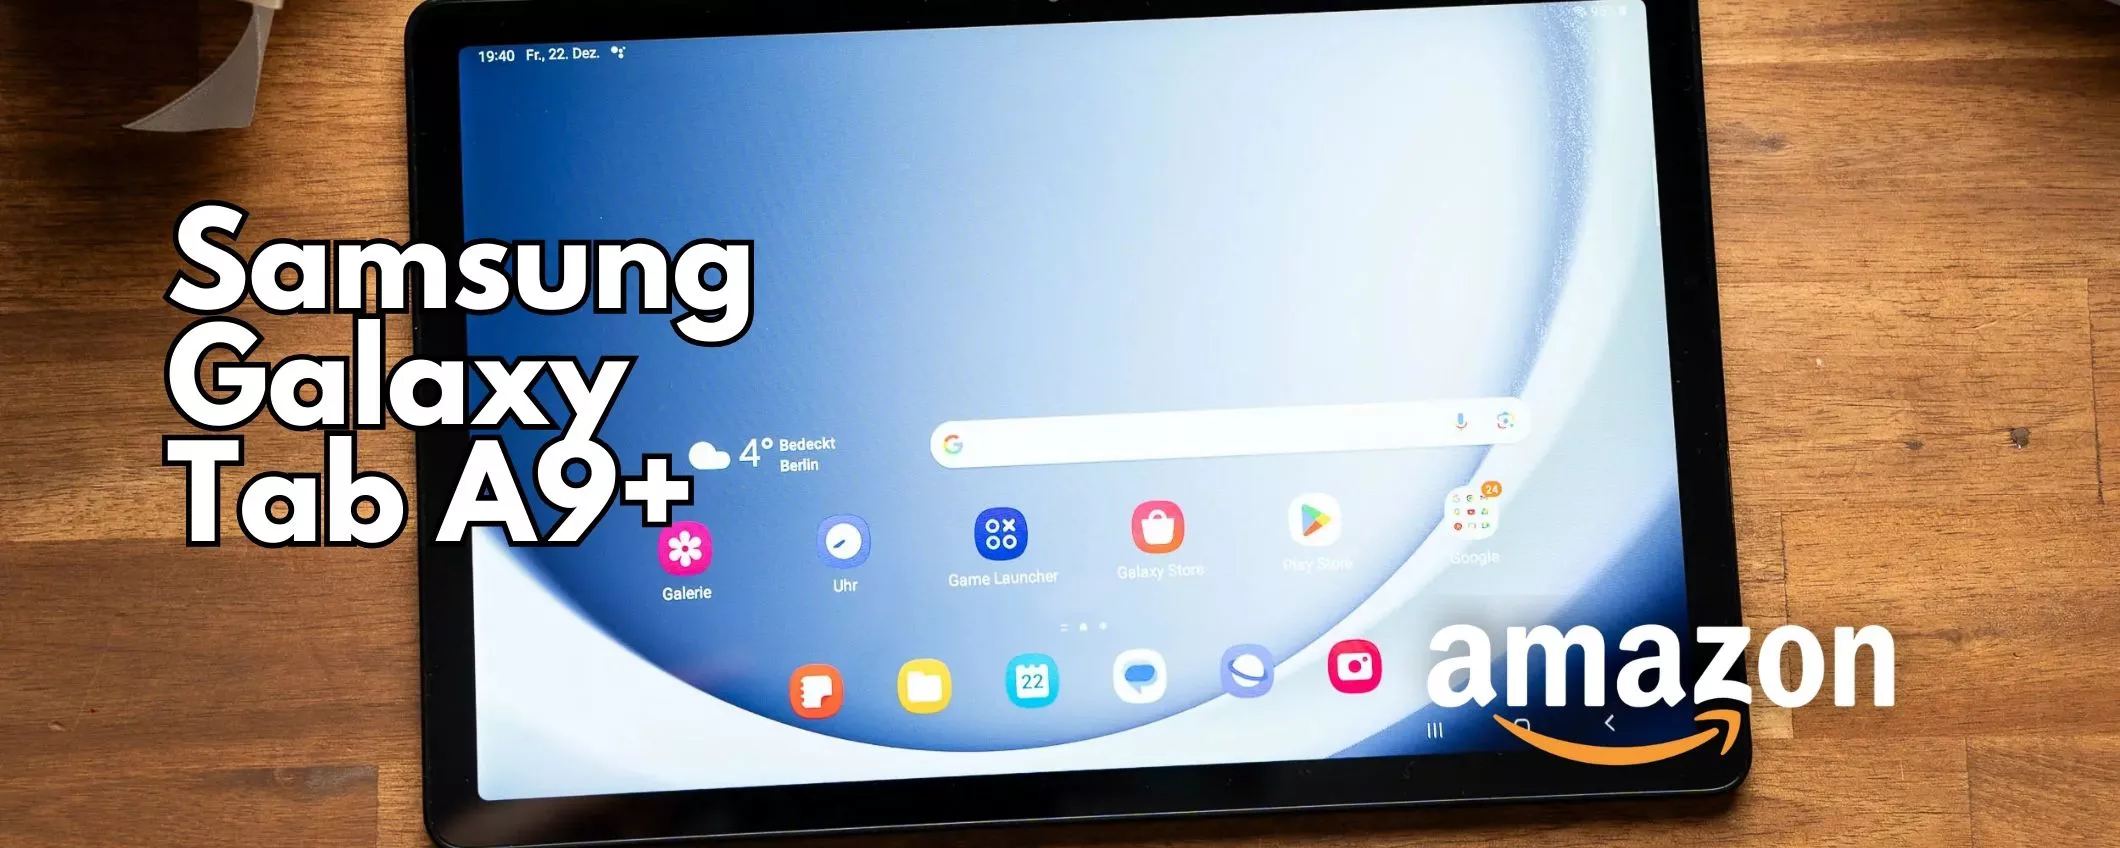 Samsung Galaxy Tab A9+ ECCOLA l'OFFERTA che manda in CRISI Amazon